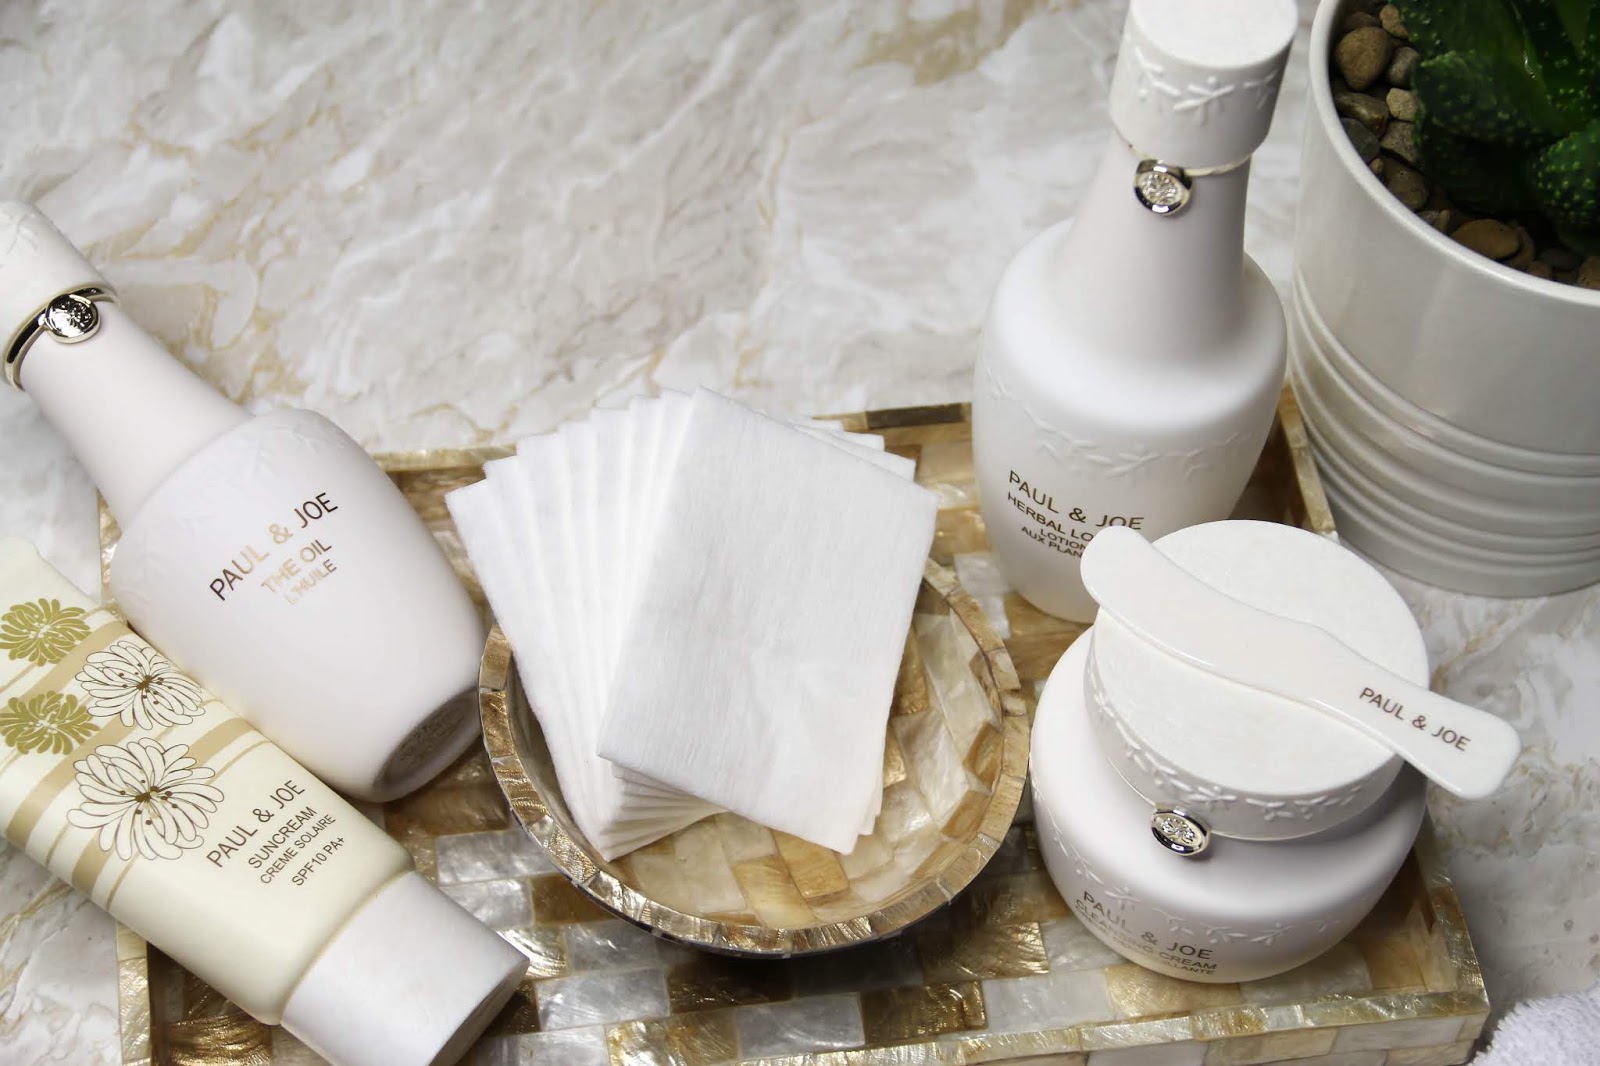 Paul & Joe Beaute Skincare Review by UK Beauty Blogger WhatLauraLoves